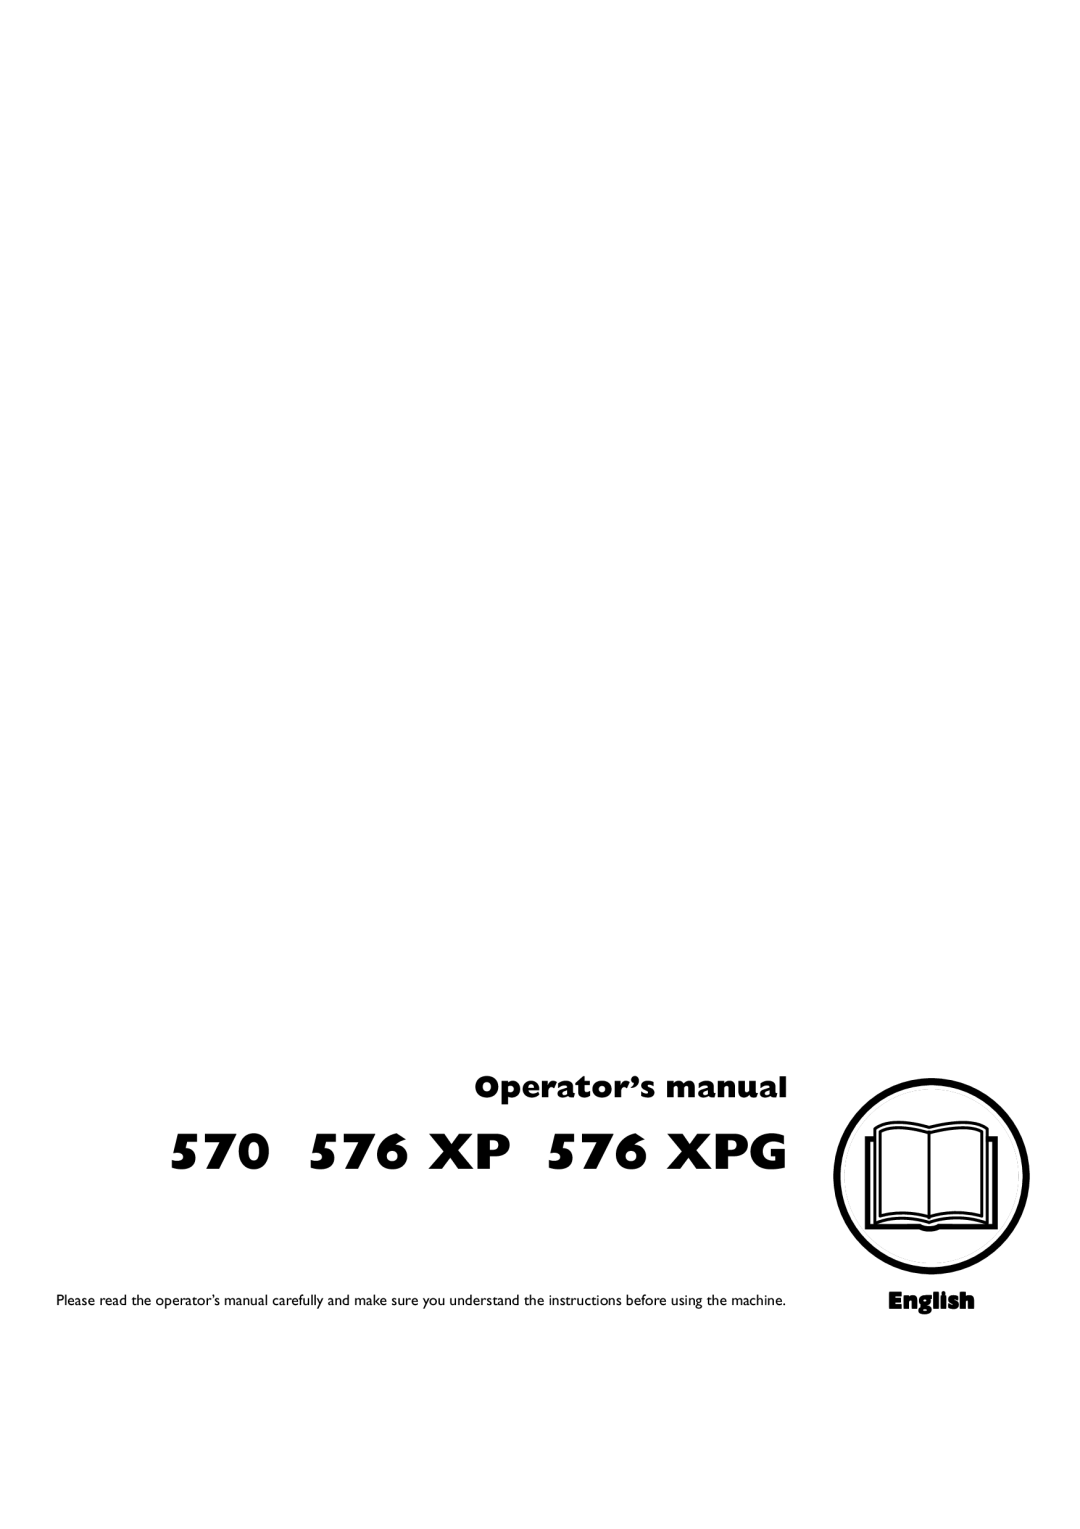 Husqvarna 1153181-95 manual 570 576 XP 576 XPG, Operator’s manual, English 